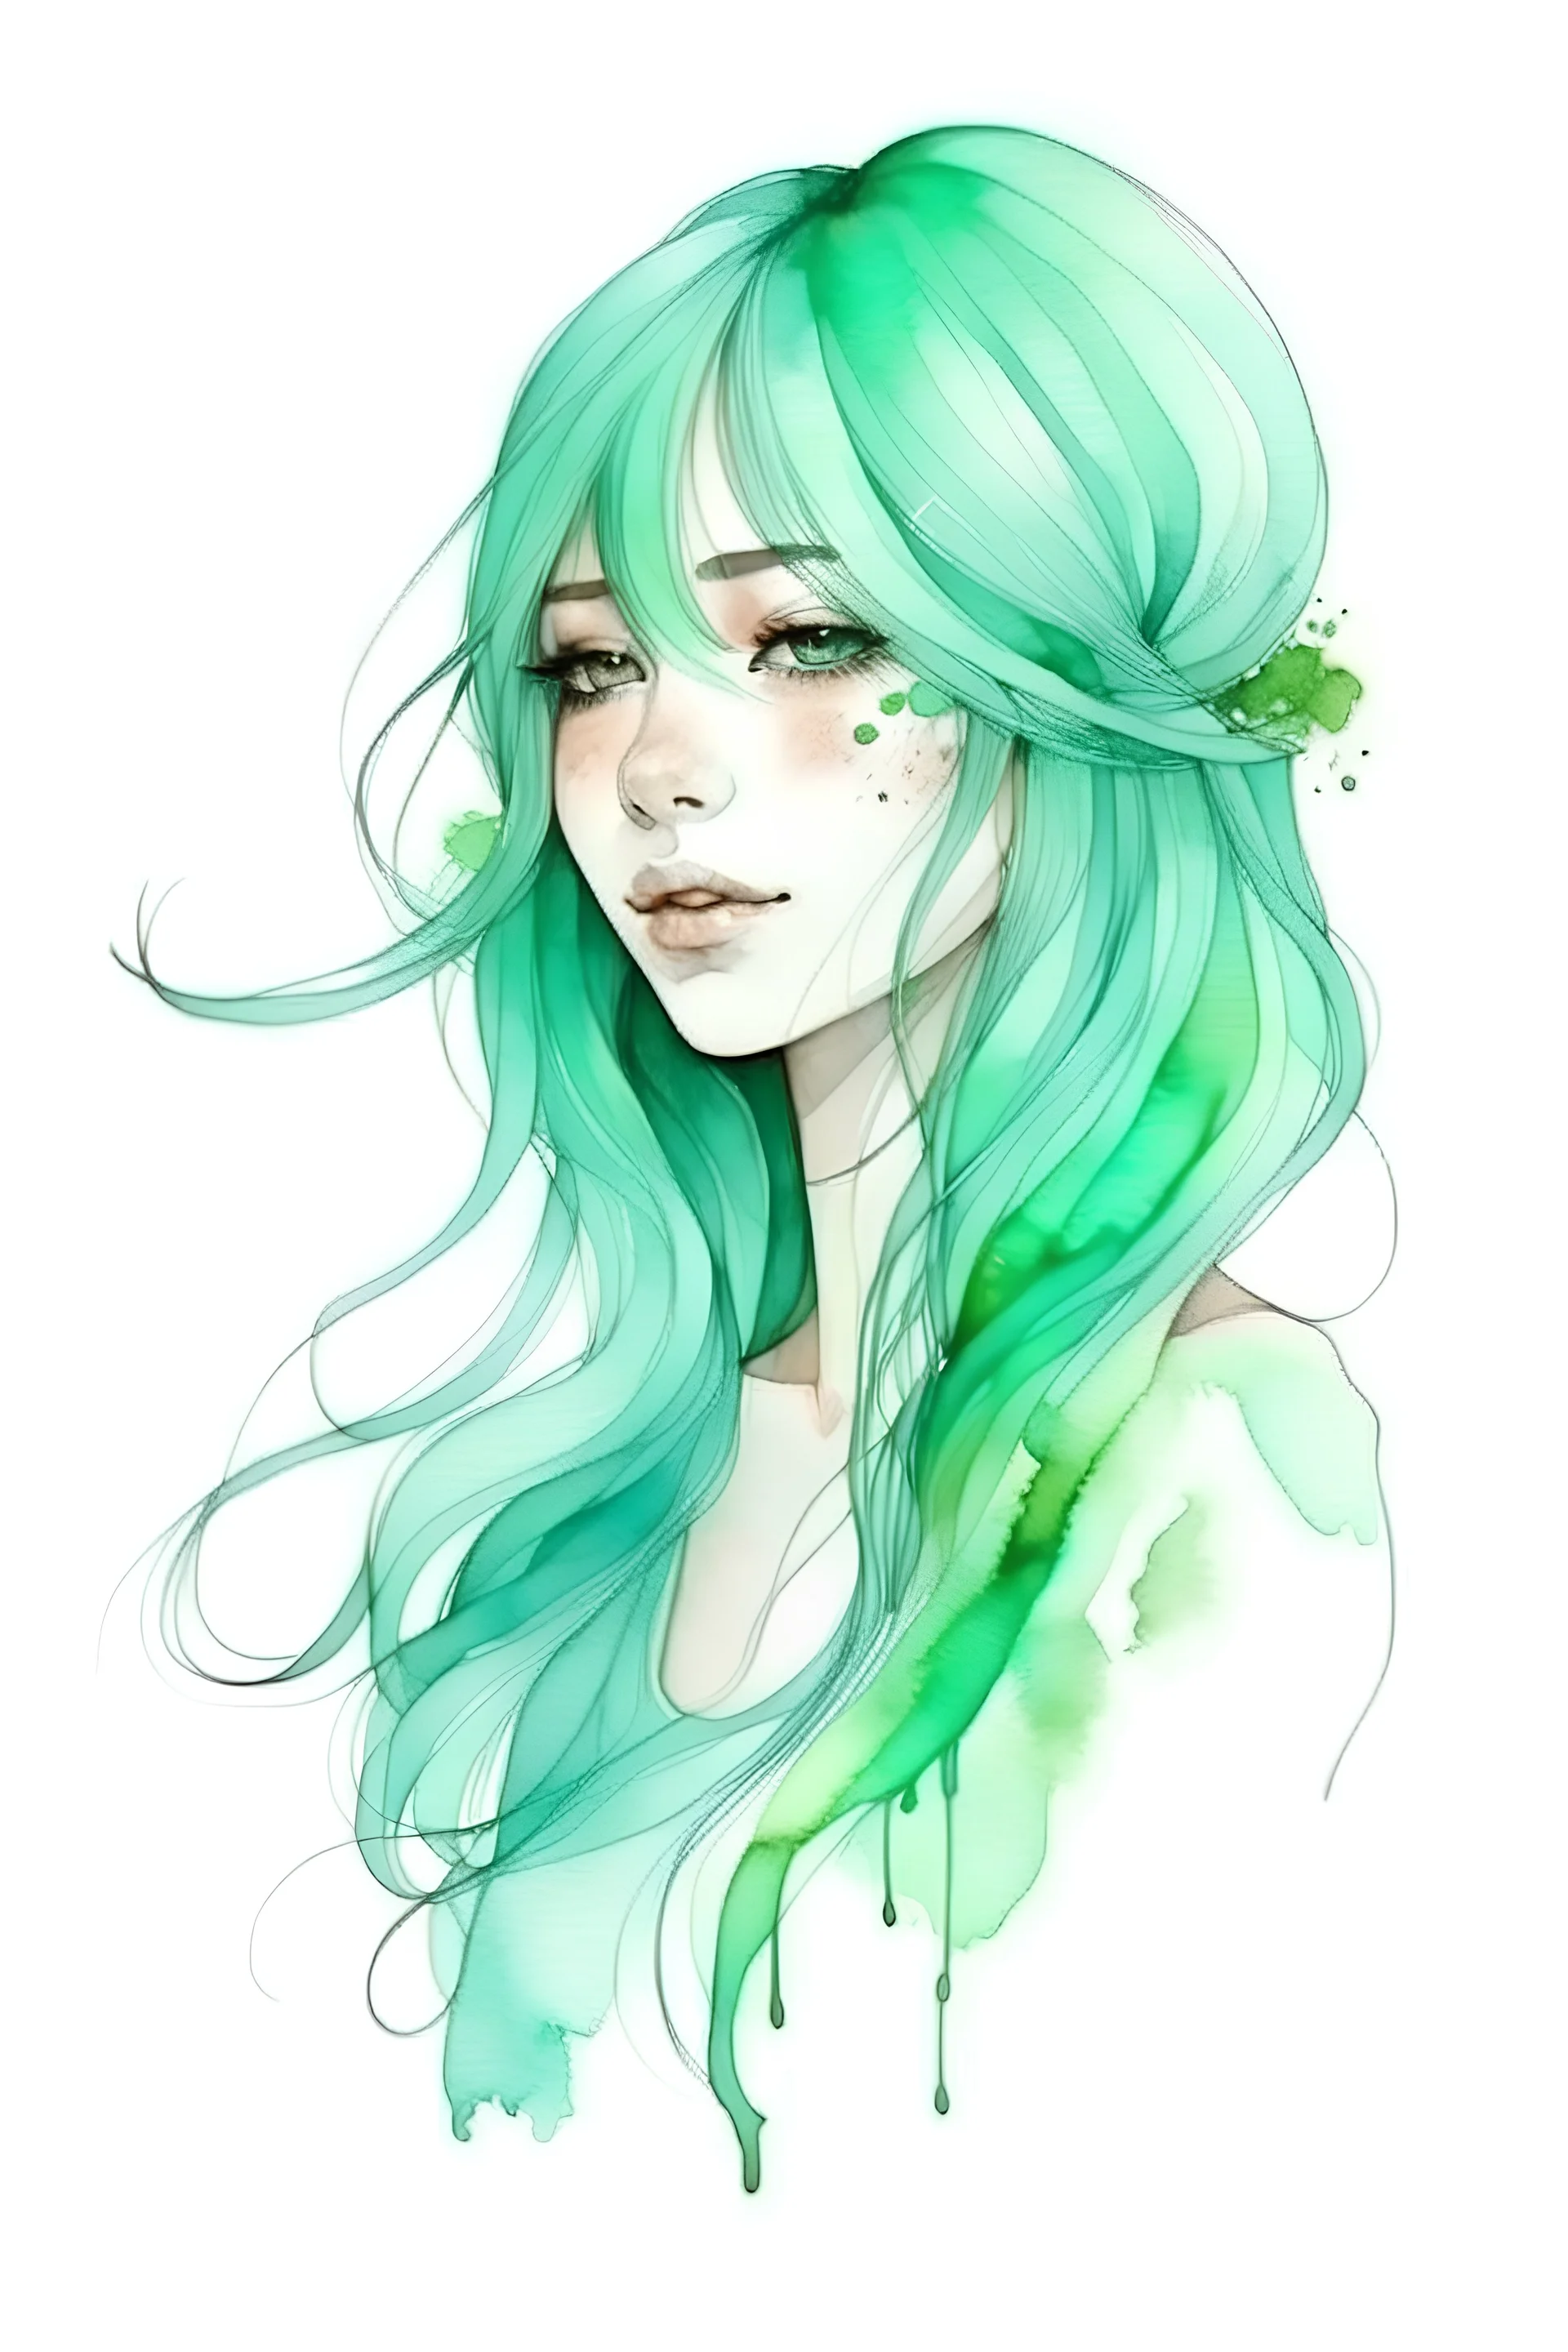 Watercolor long mint fringed hair girl